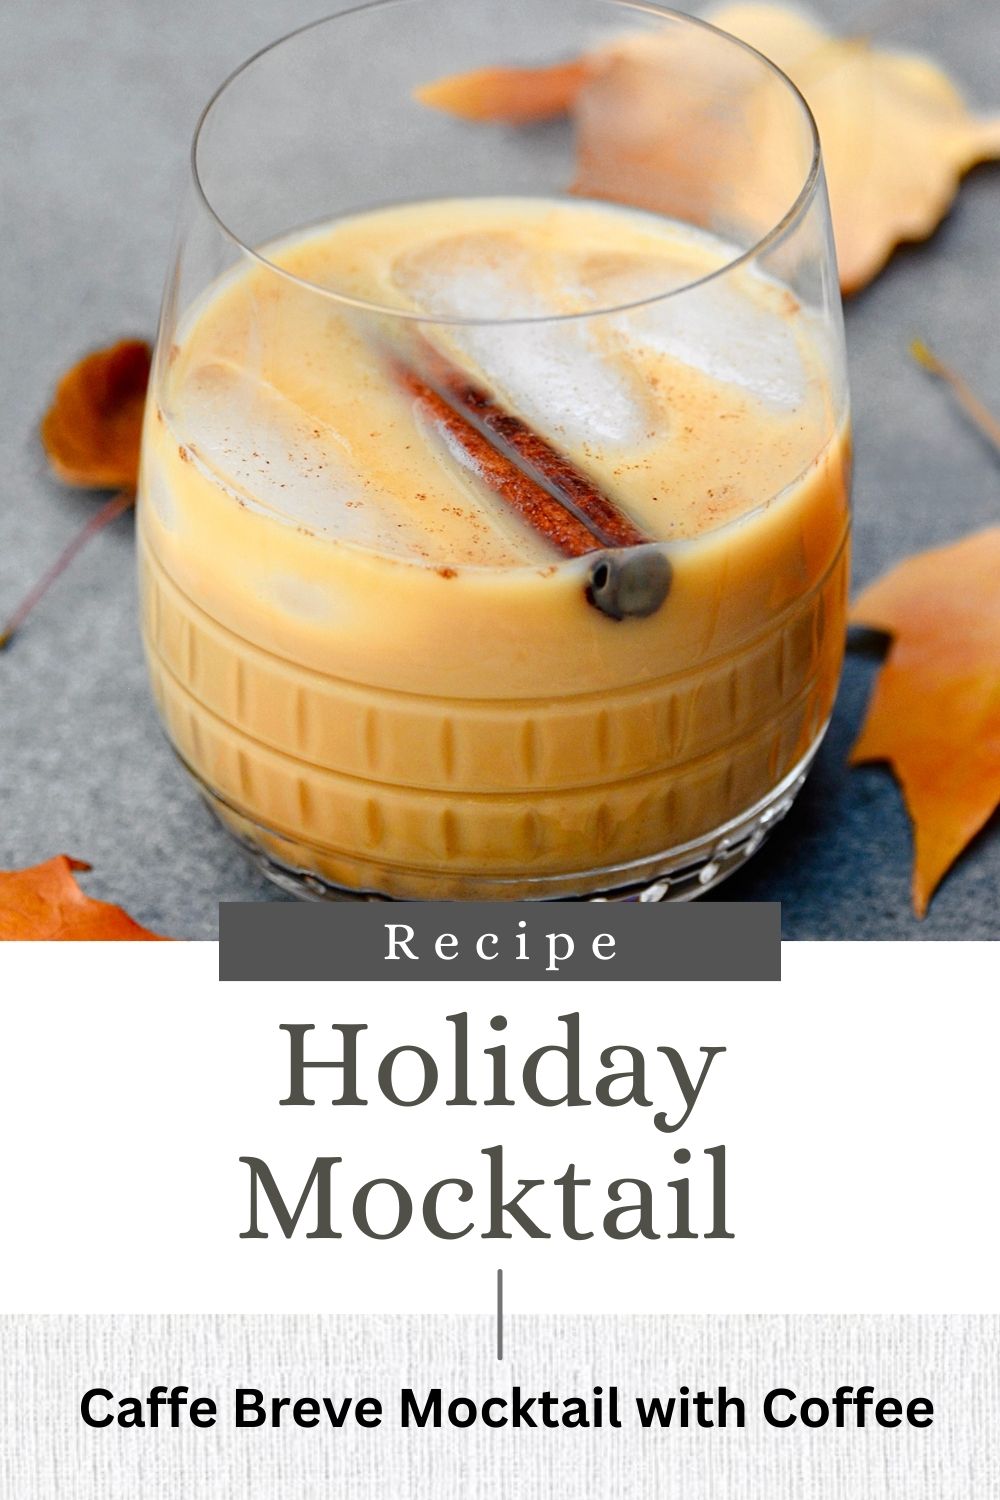 Autumn Caffe Breve Mocktail